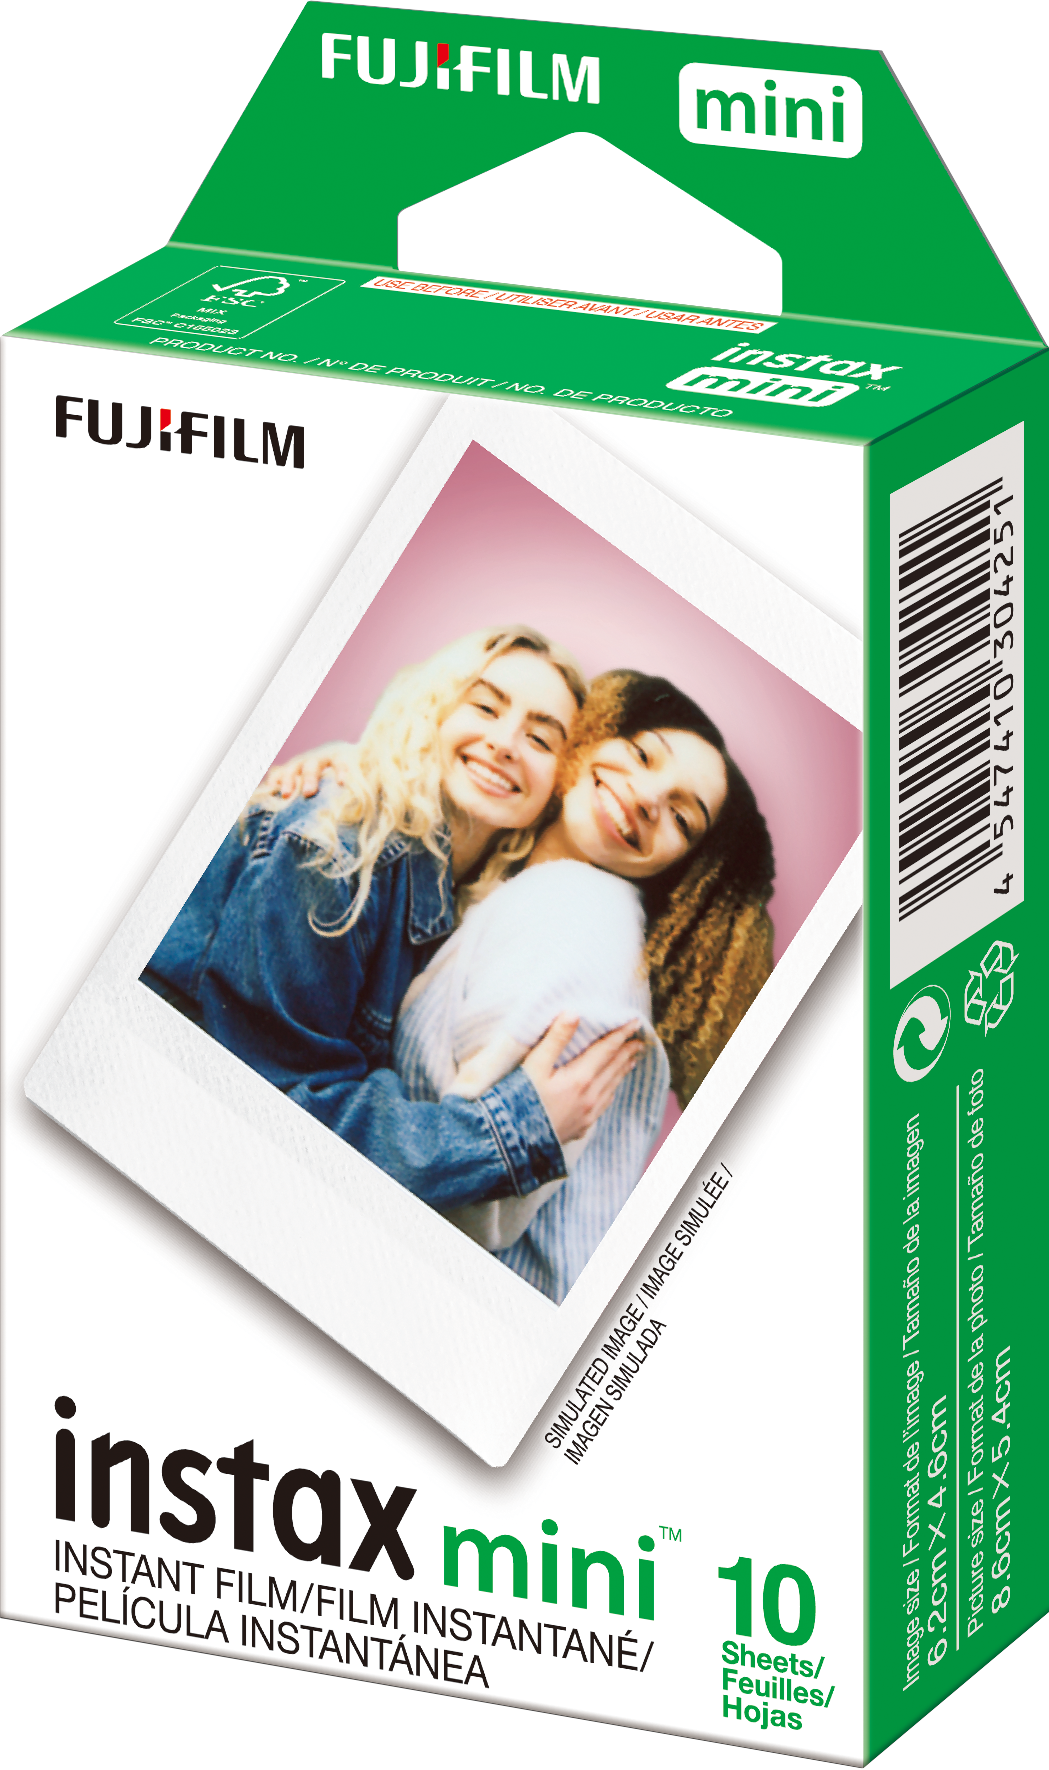 Fujifilm INSTAX Mini 7+ Exclusive Blister Bundle with Bonus Pack of Film (10-pack Mini Film), Gray - image 5 of 8